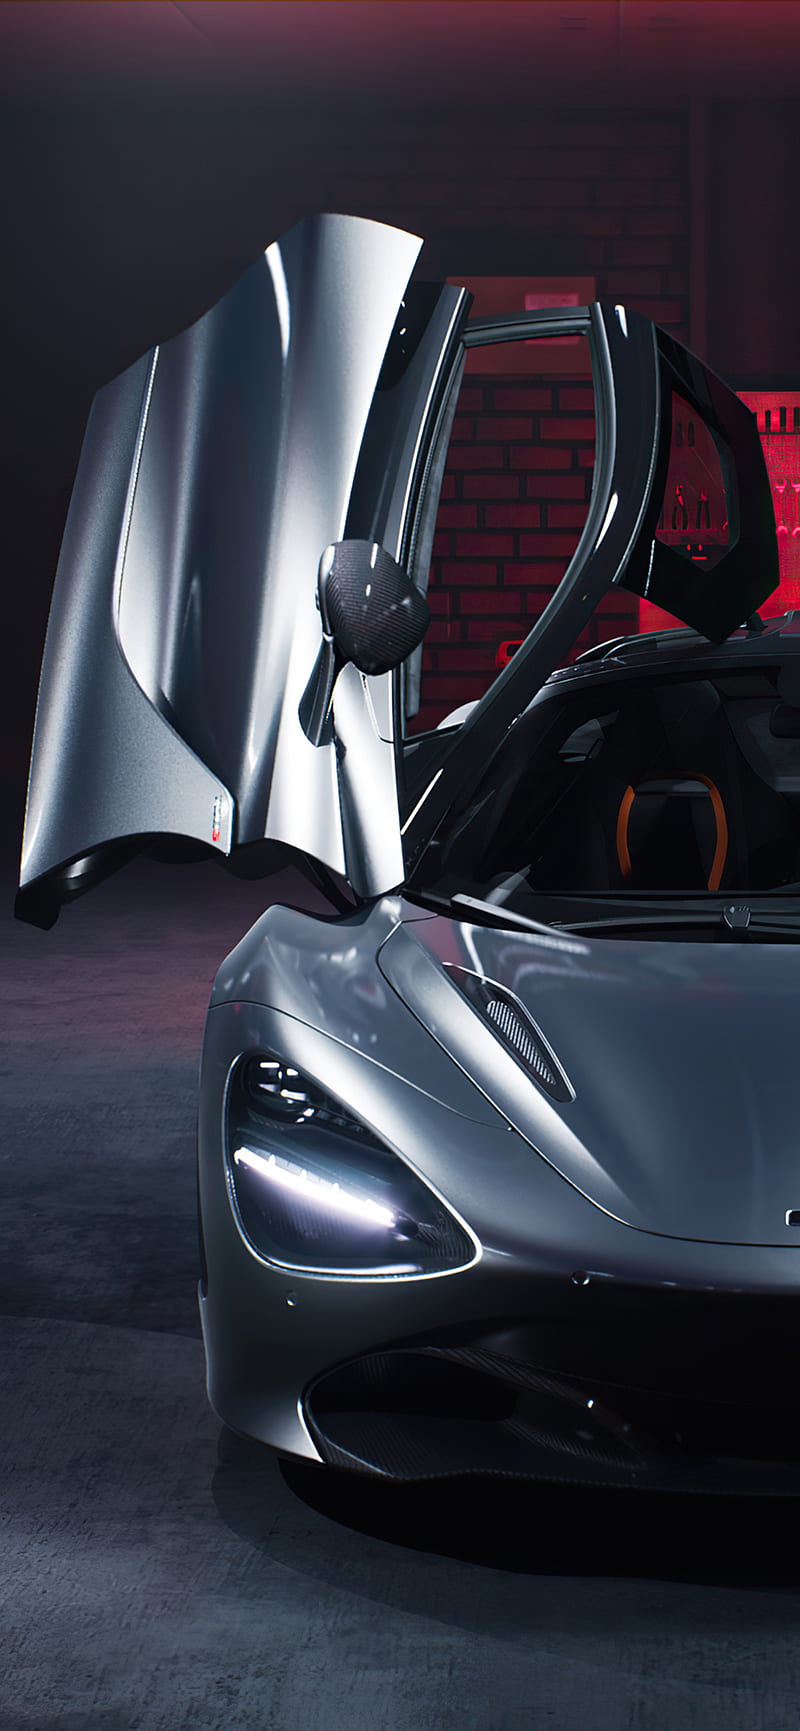 Tải xuống APK Amazing McLaren Cars Wallpaper cho Android